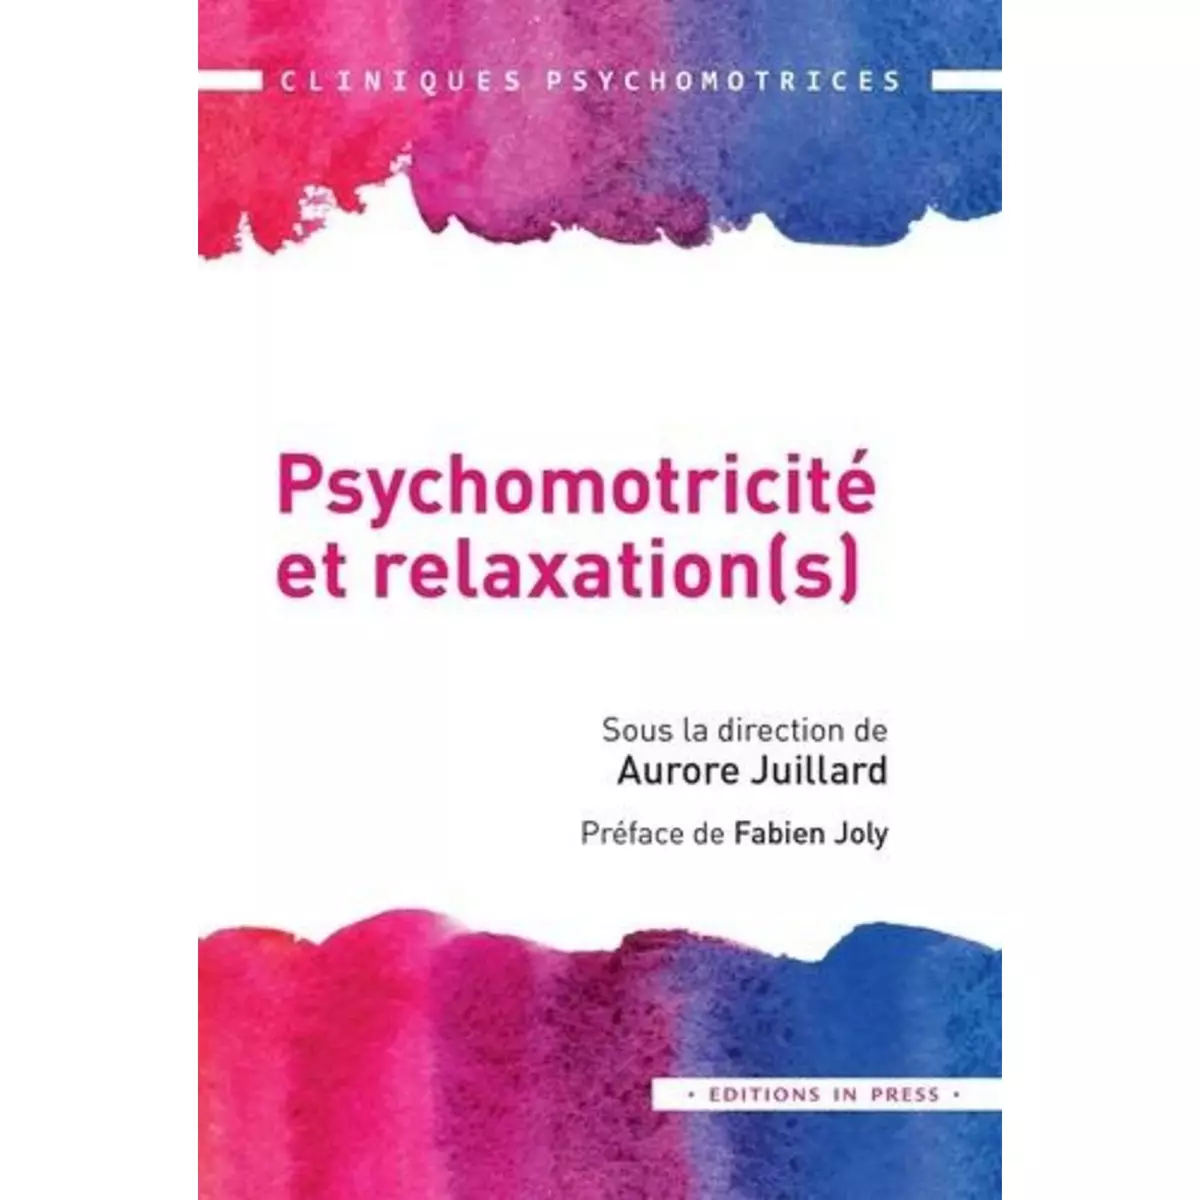  PSYCHOMOTRICITE ET RELAXATION(S), Juillard Aurore